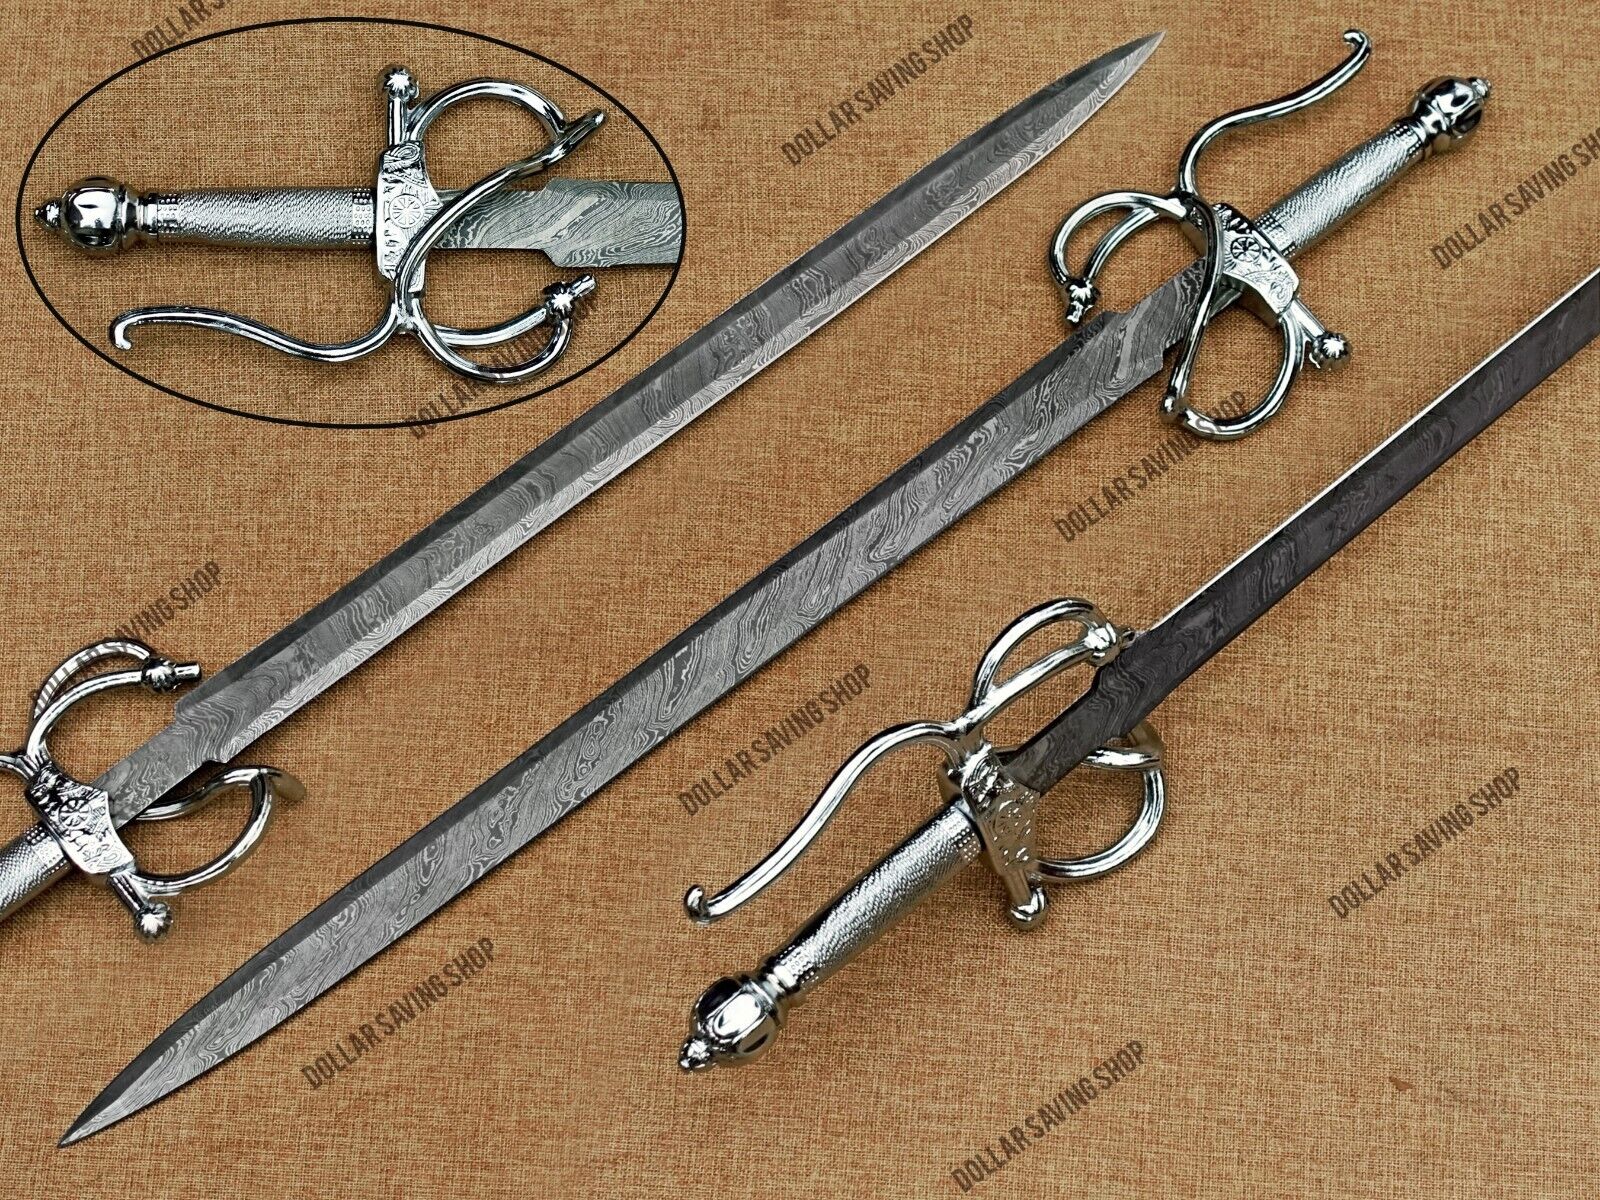 Fully Handmade Damascus Steel Medieval / Rapier Sword With Leather Sheath.